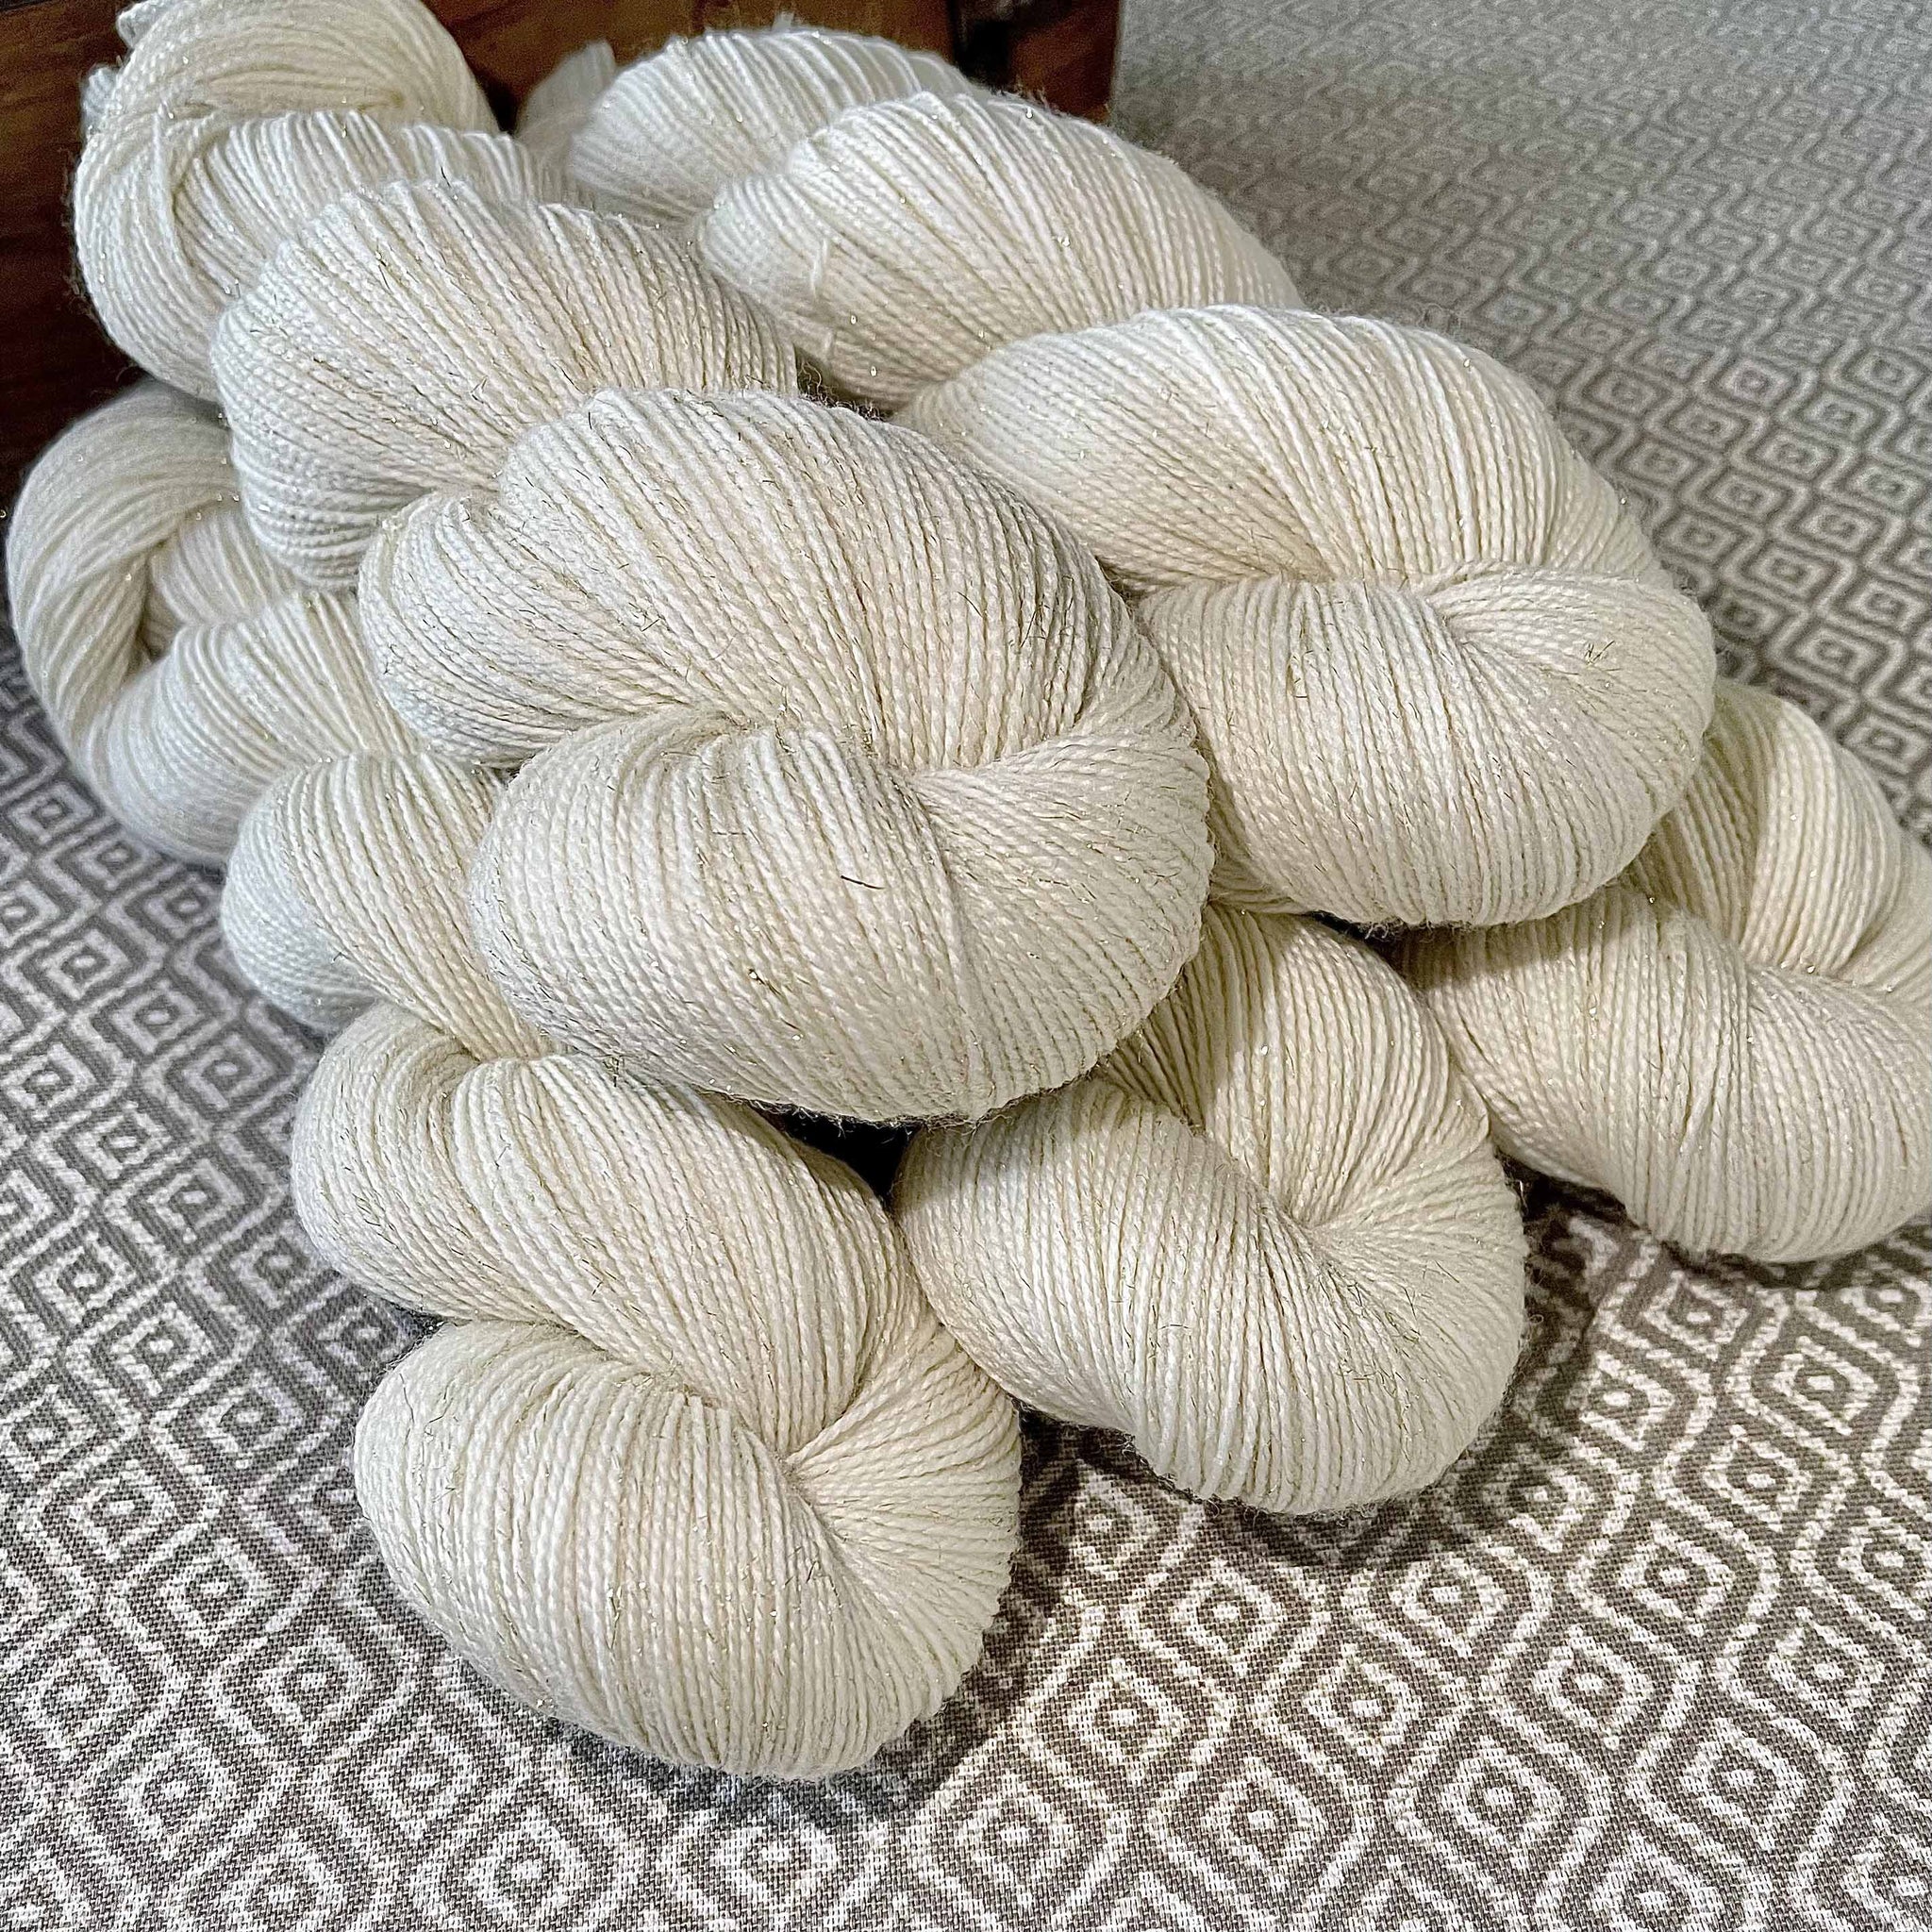 Natural Wool Yarn, Blue Thin Wool Yarn for Crocheting Weaving, 100